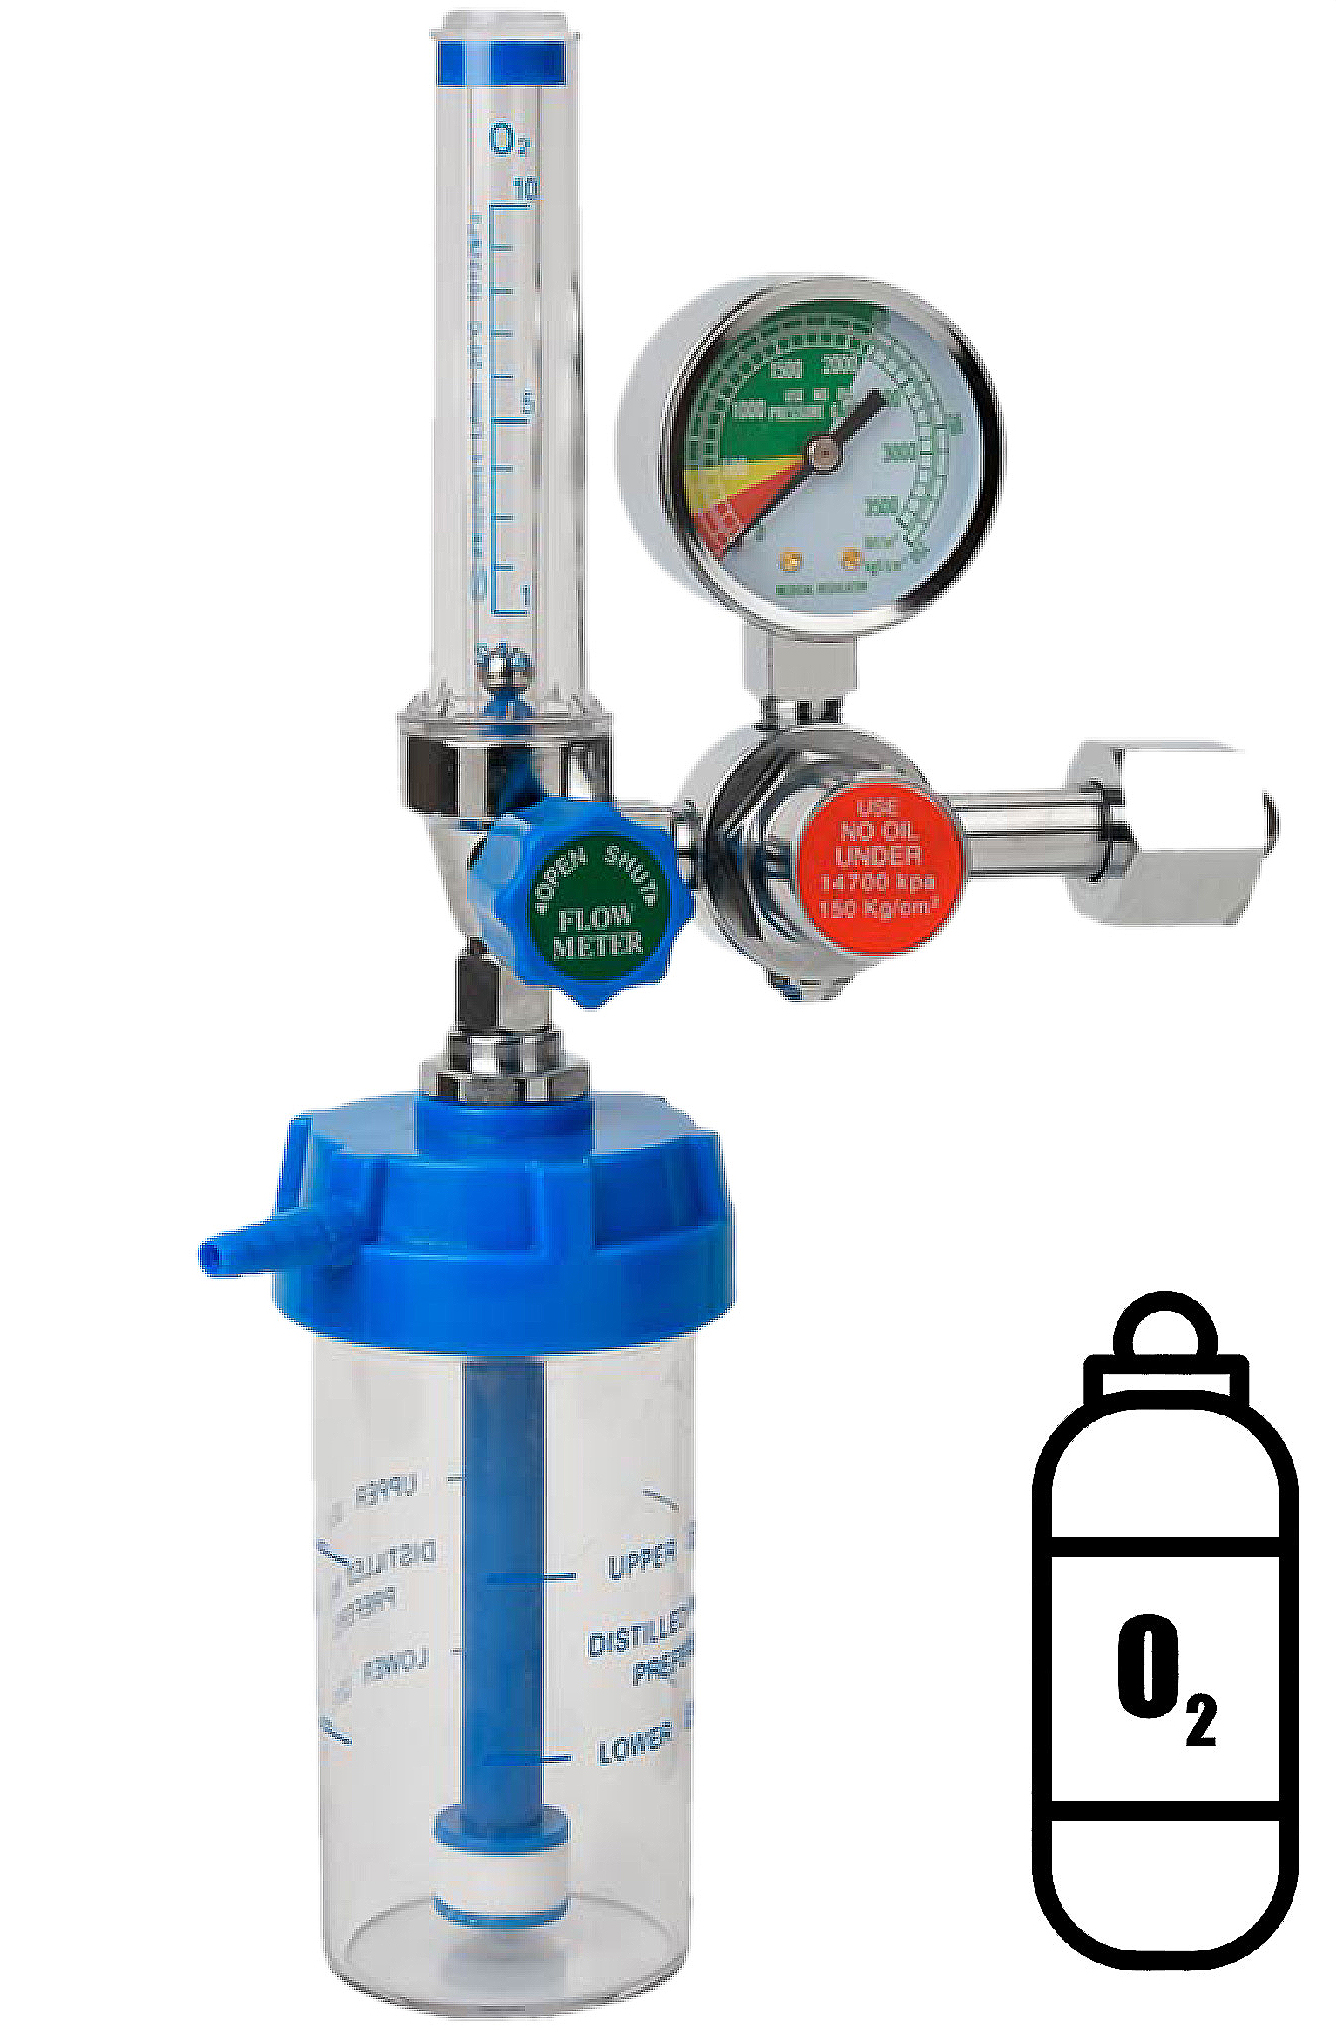 Kimura oxygen gas pressure gauge